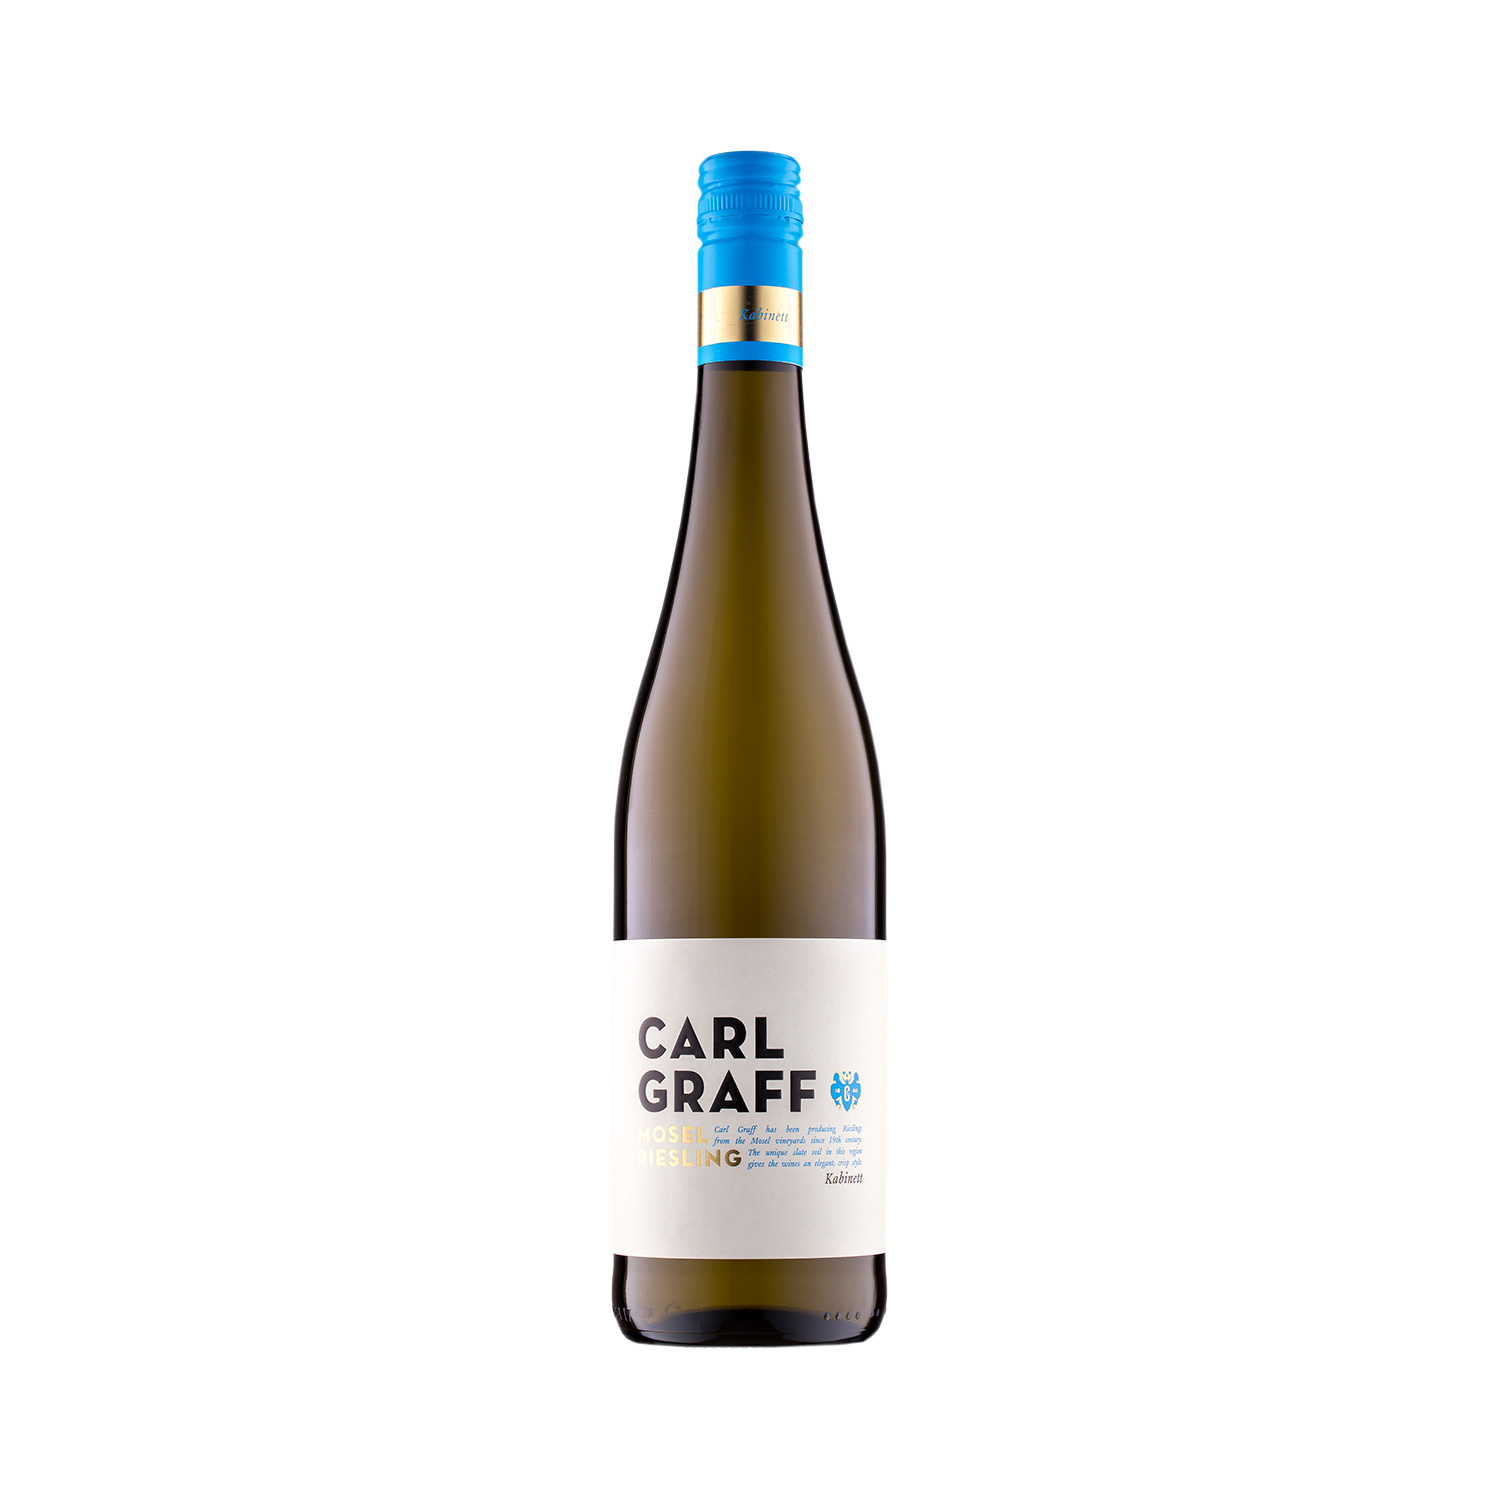 DEV2305 德國卡爾格拉夫酒莊麗絲玲珍藏白葡萄酒 Carl Graff Mosel Riesling Kabinett 